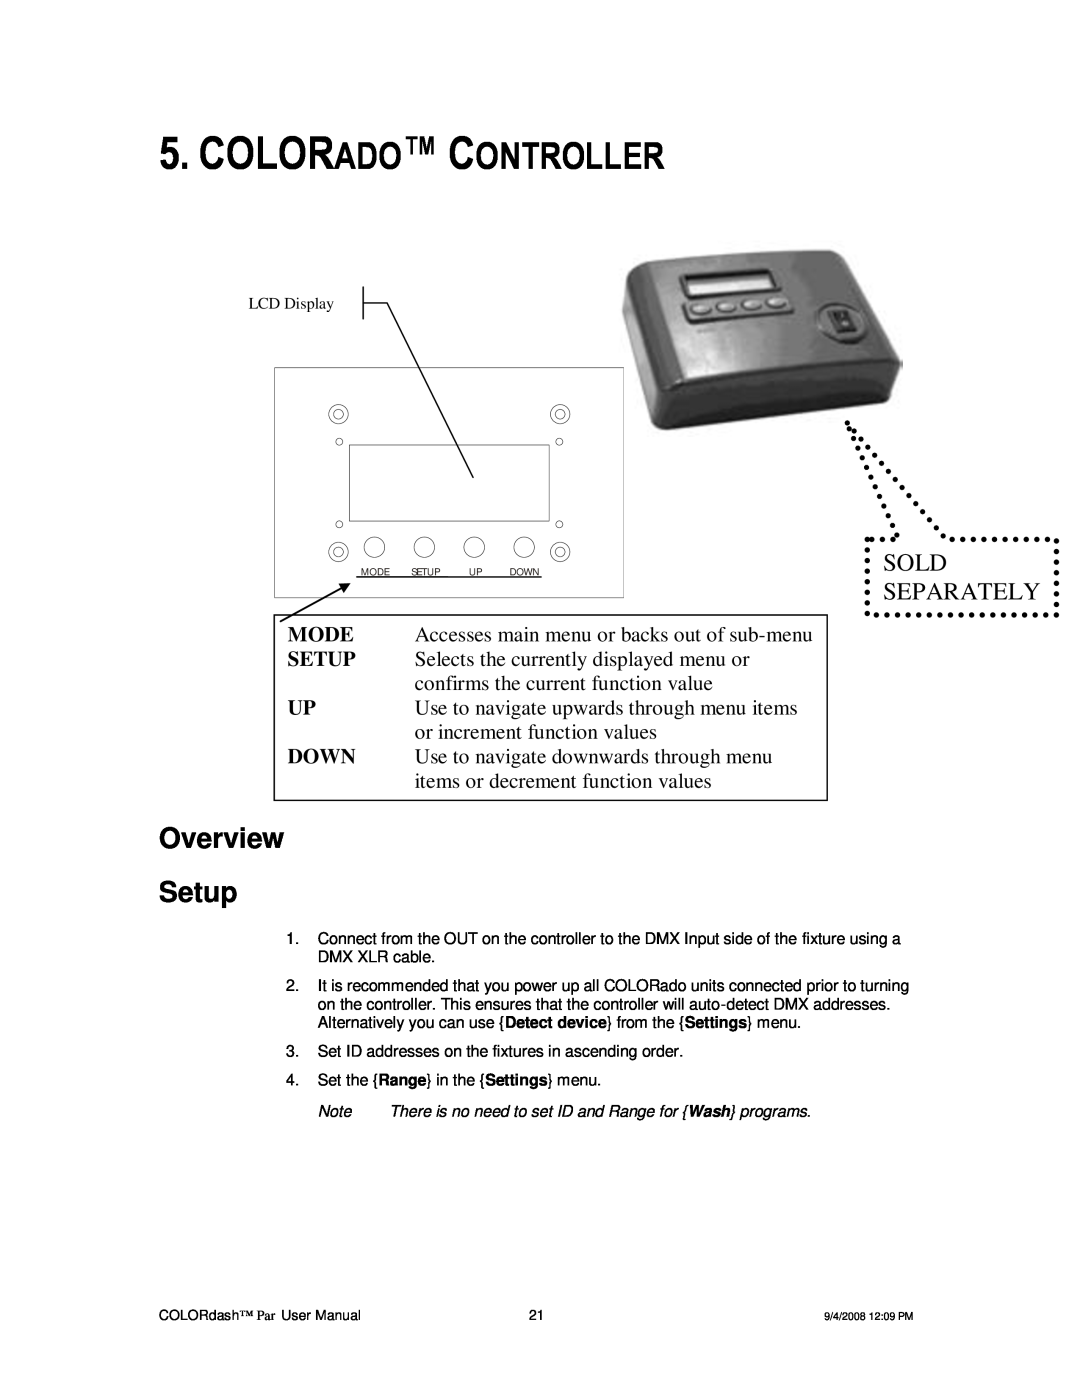 Chauvet DMX512 user manual Colorado Controller, Overview Setup, Sold Separately 